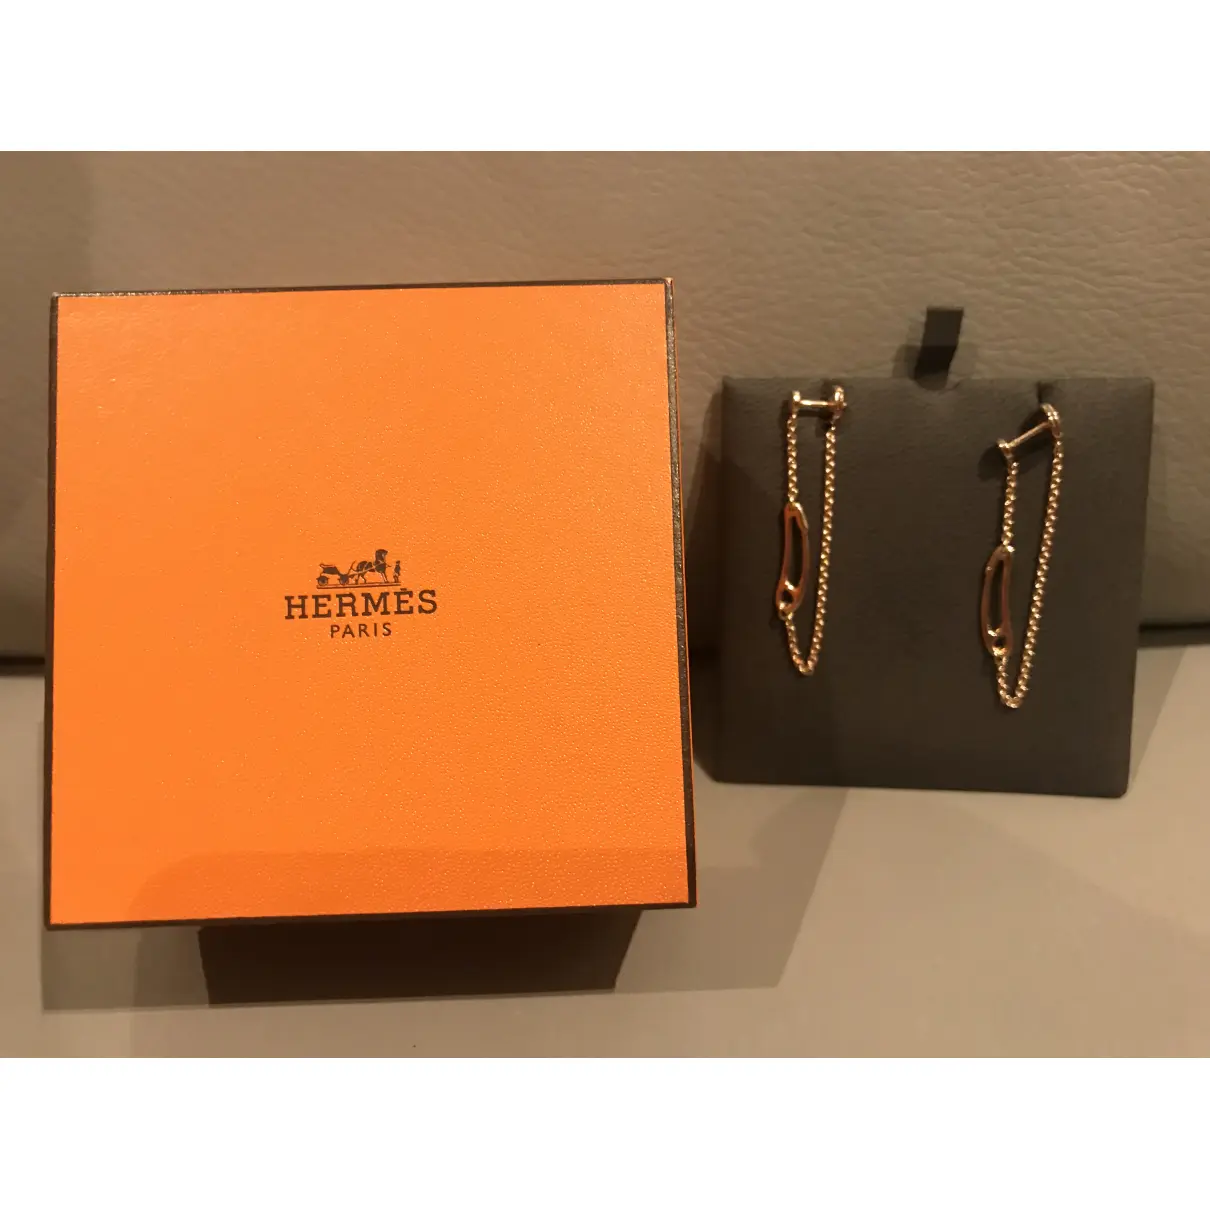 Buy Hermès Chaîne d'Ancre pink gold earrings online